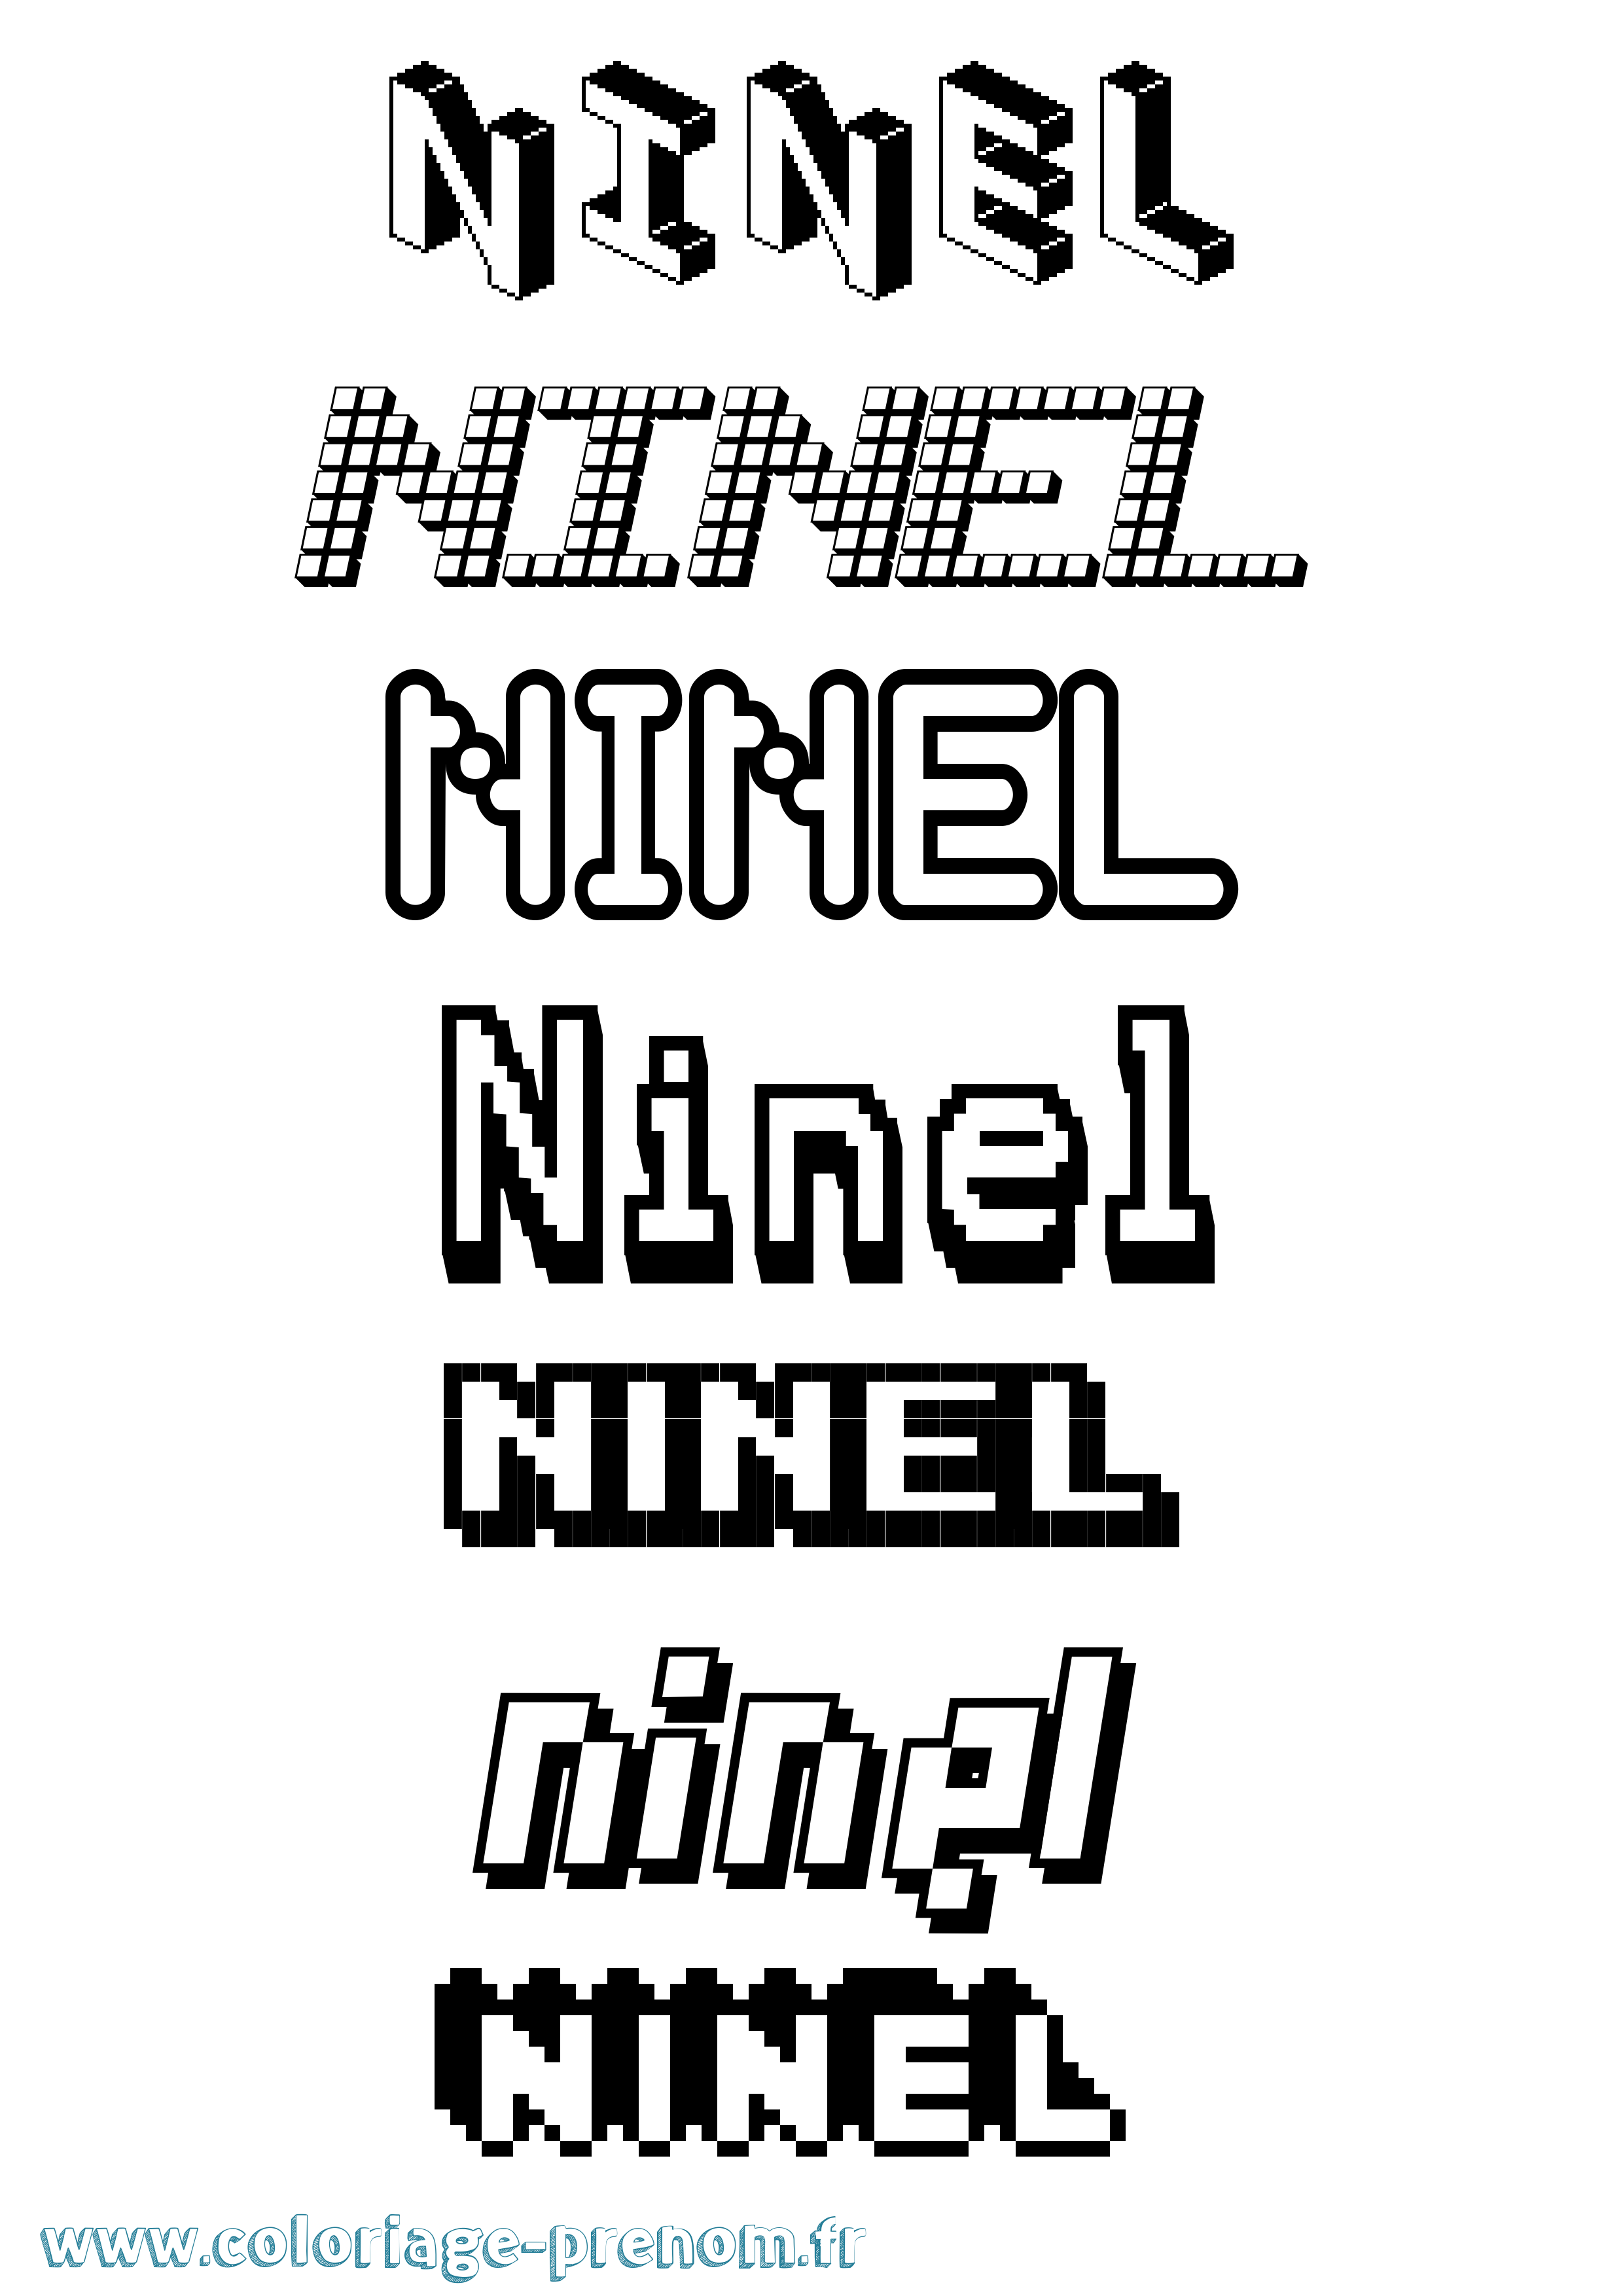 Coloriage prénom Ninel Pixel